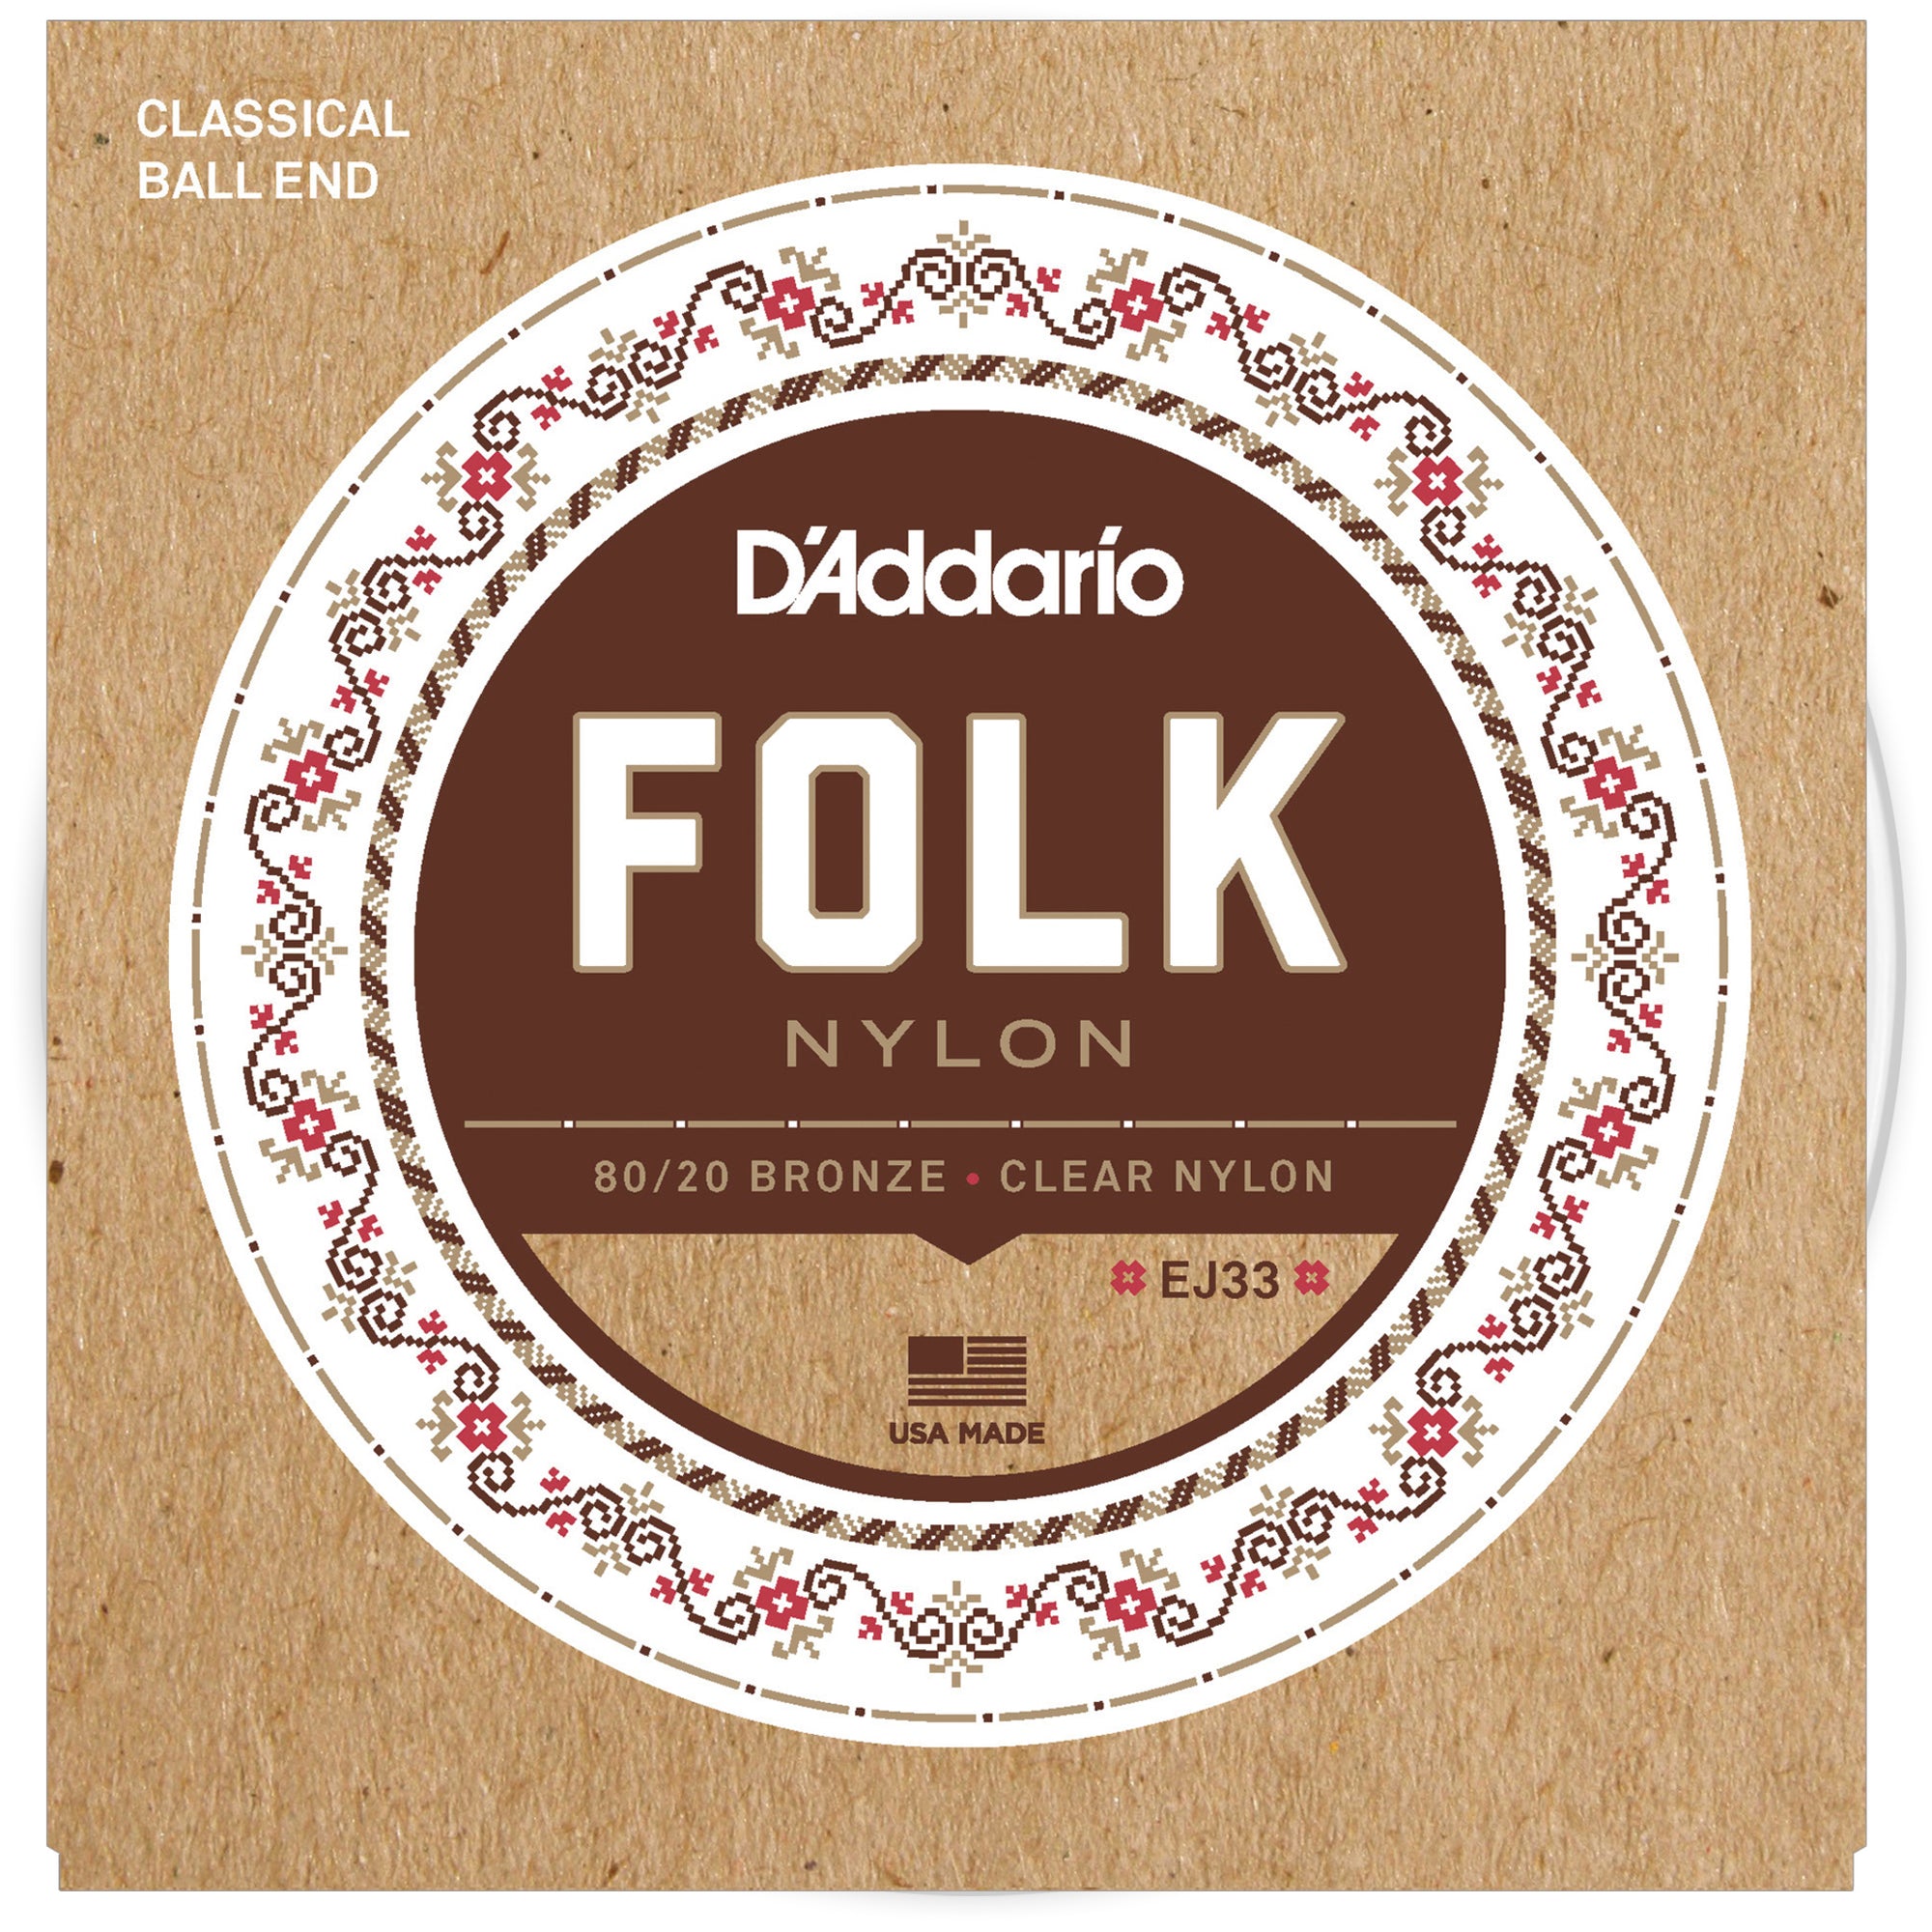 D'Addario EJ33 Folk Nylon Classical Guitar Strings